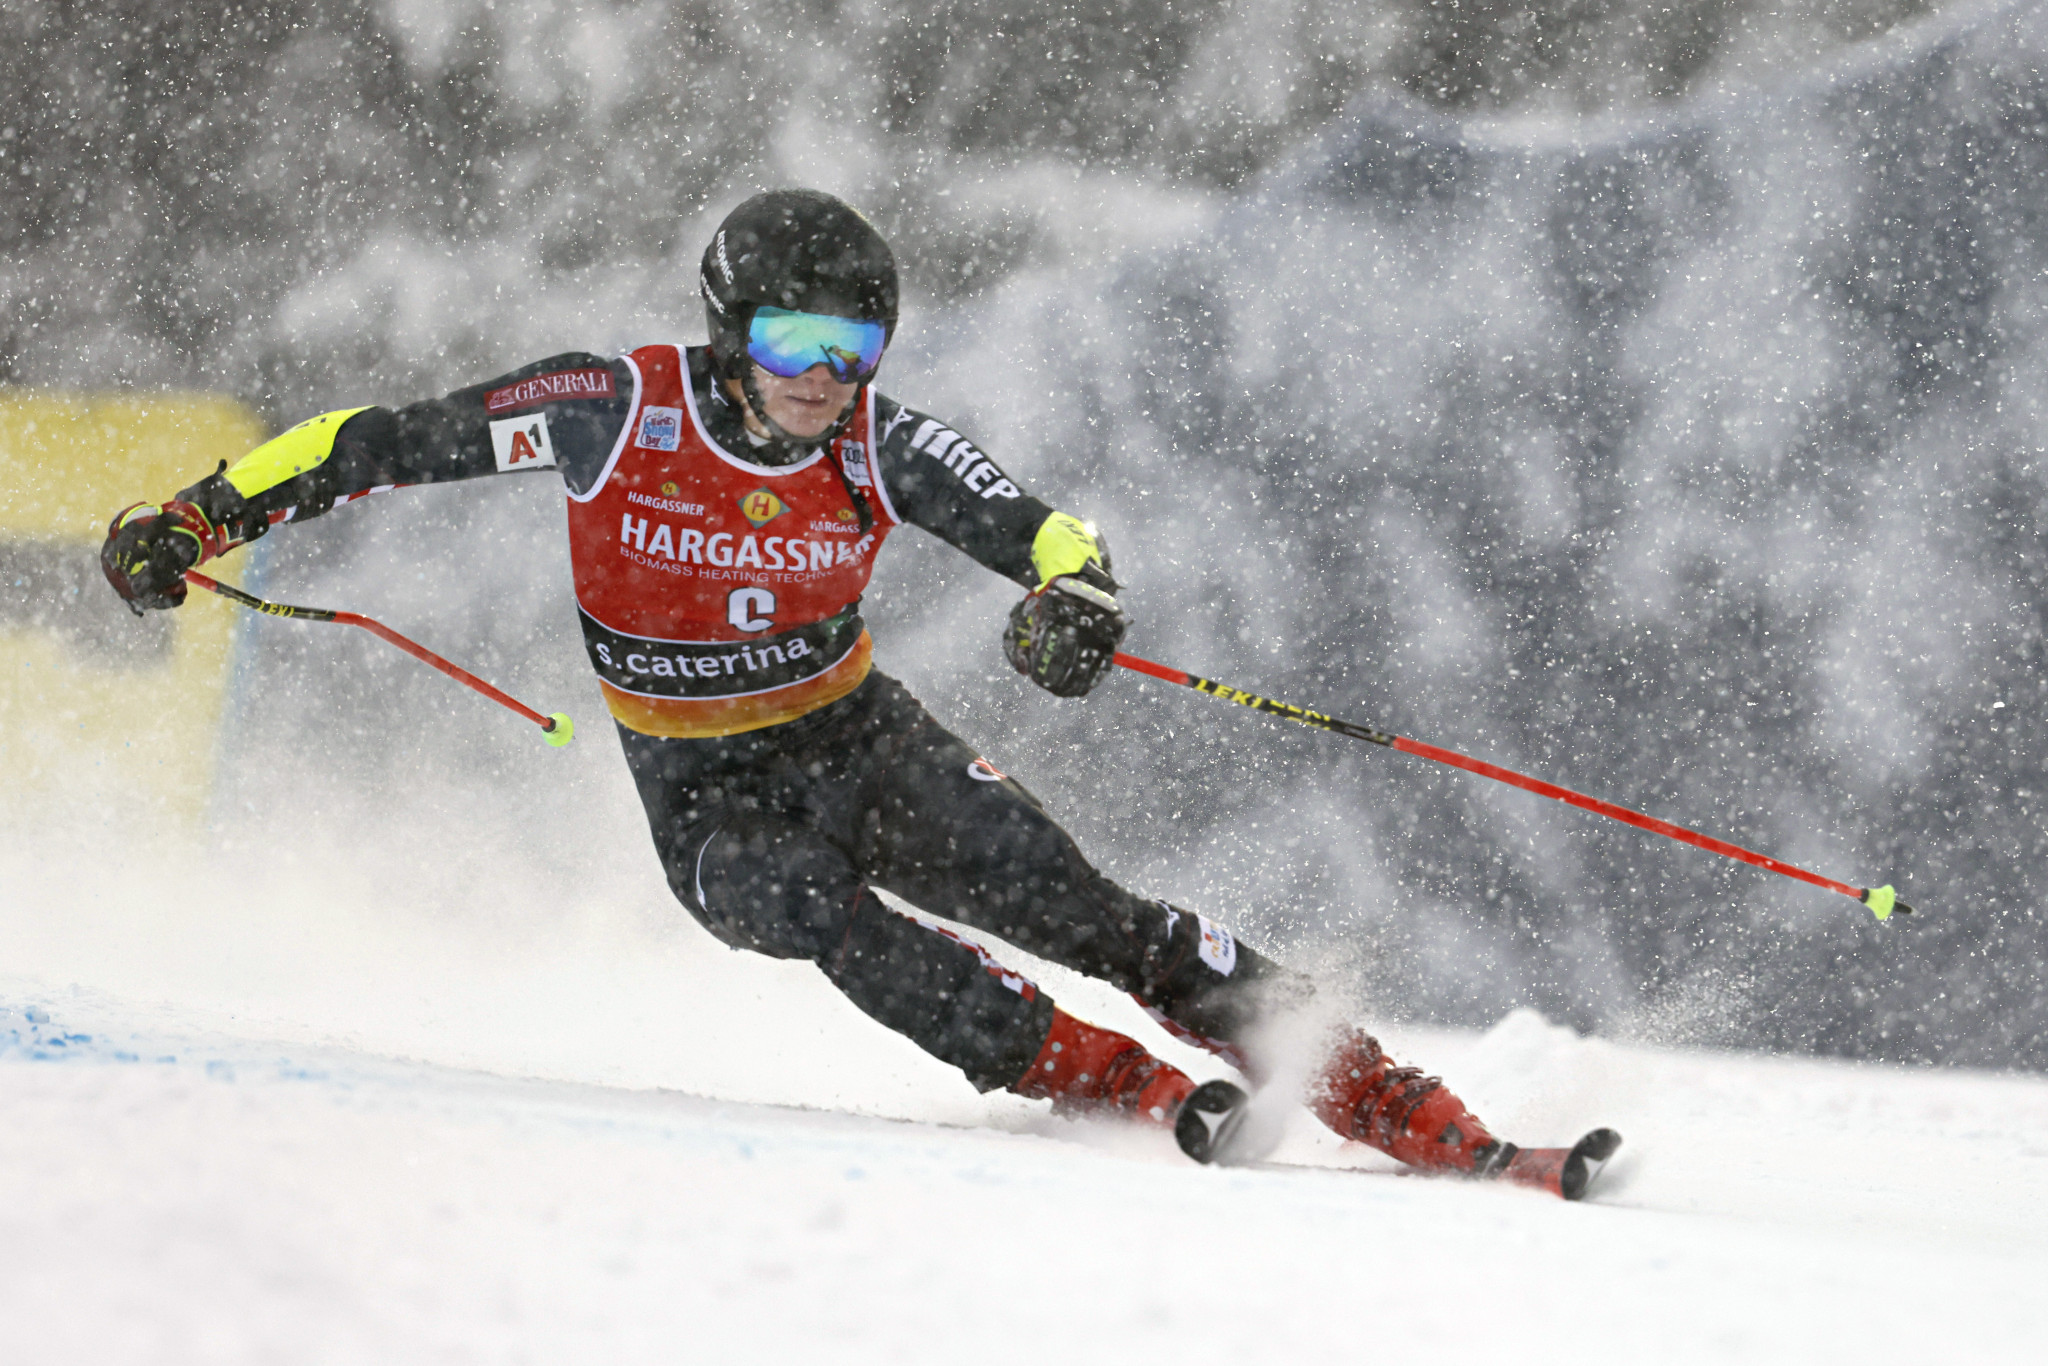 Filip Zubčić battled through heavy snow to win the men's giant slalom race in Santa Caterina ©Getty Images